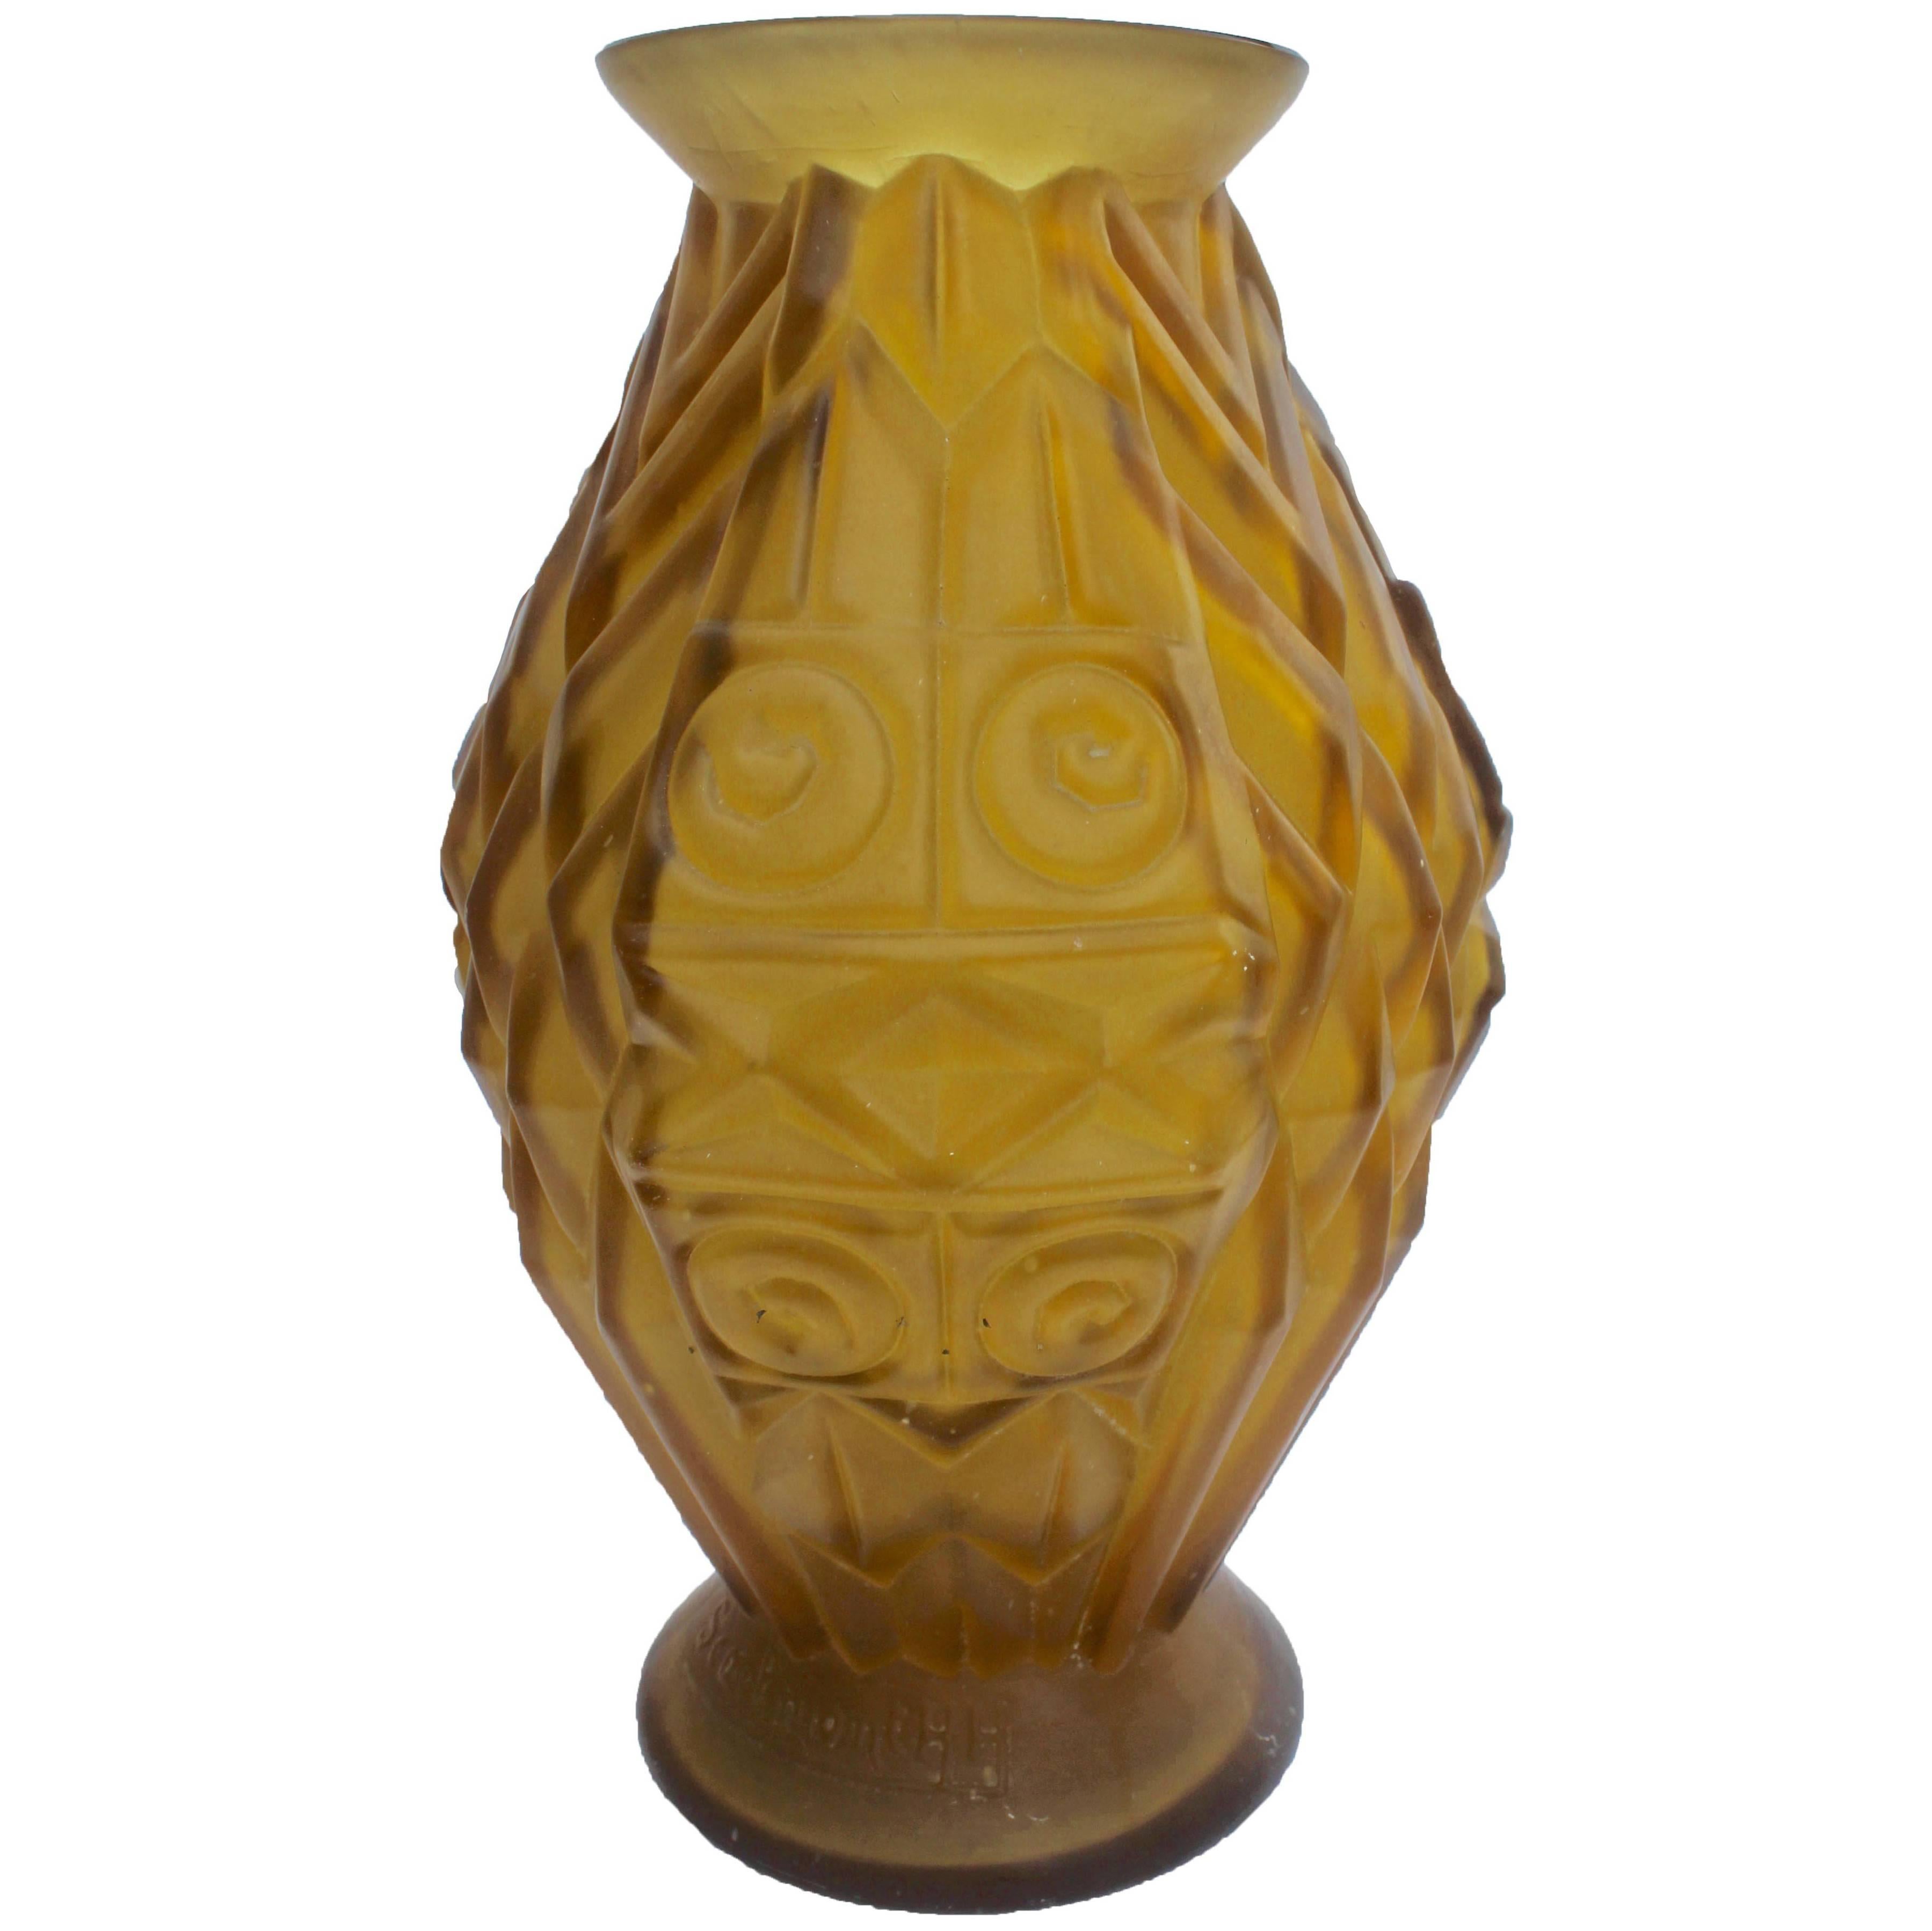 Art Deco Scailmont Vase Designed by Henri Heemskerk Signed, circa 1925